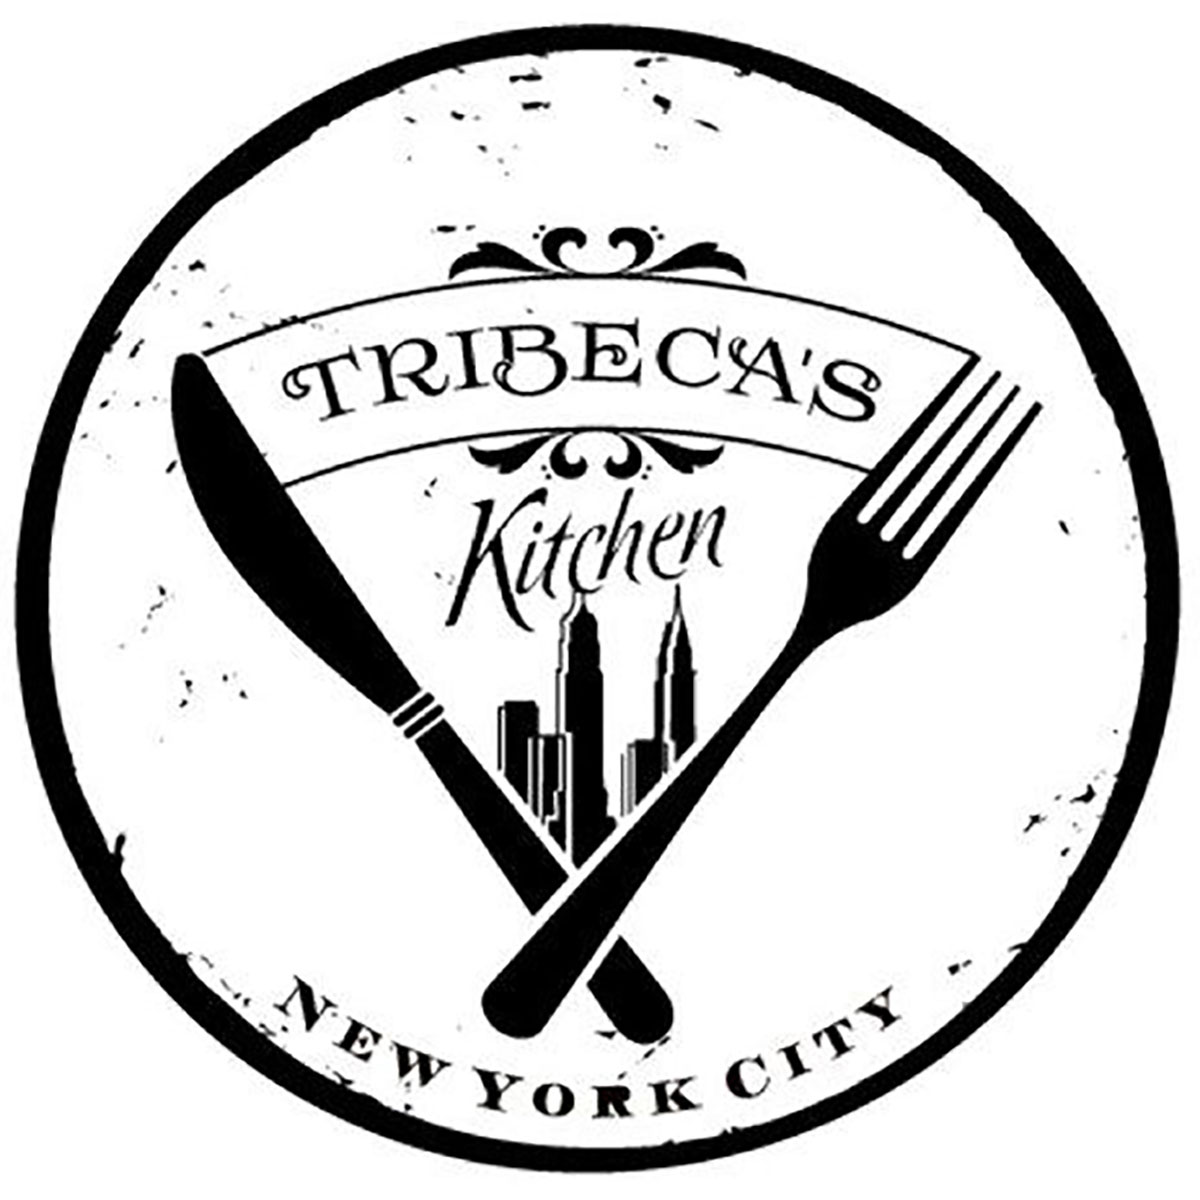 tribecas-kitchen-nyc-logo.jpg